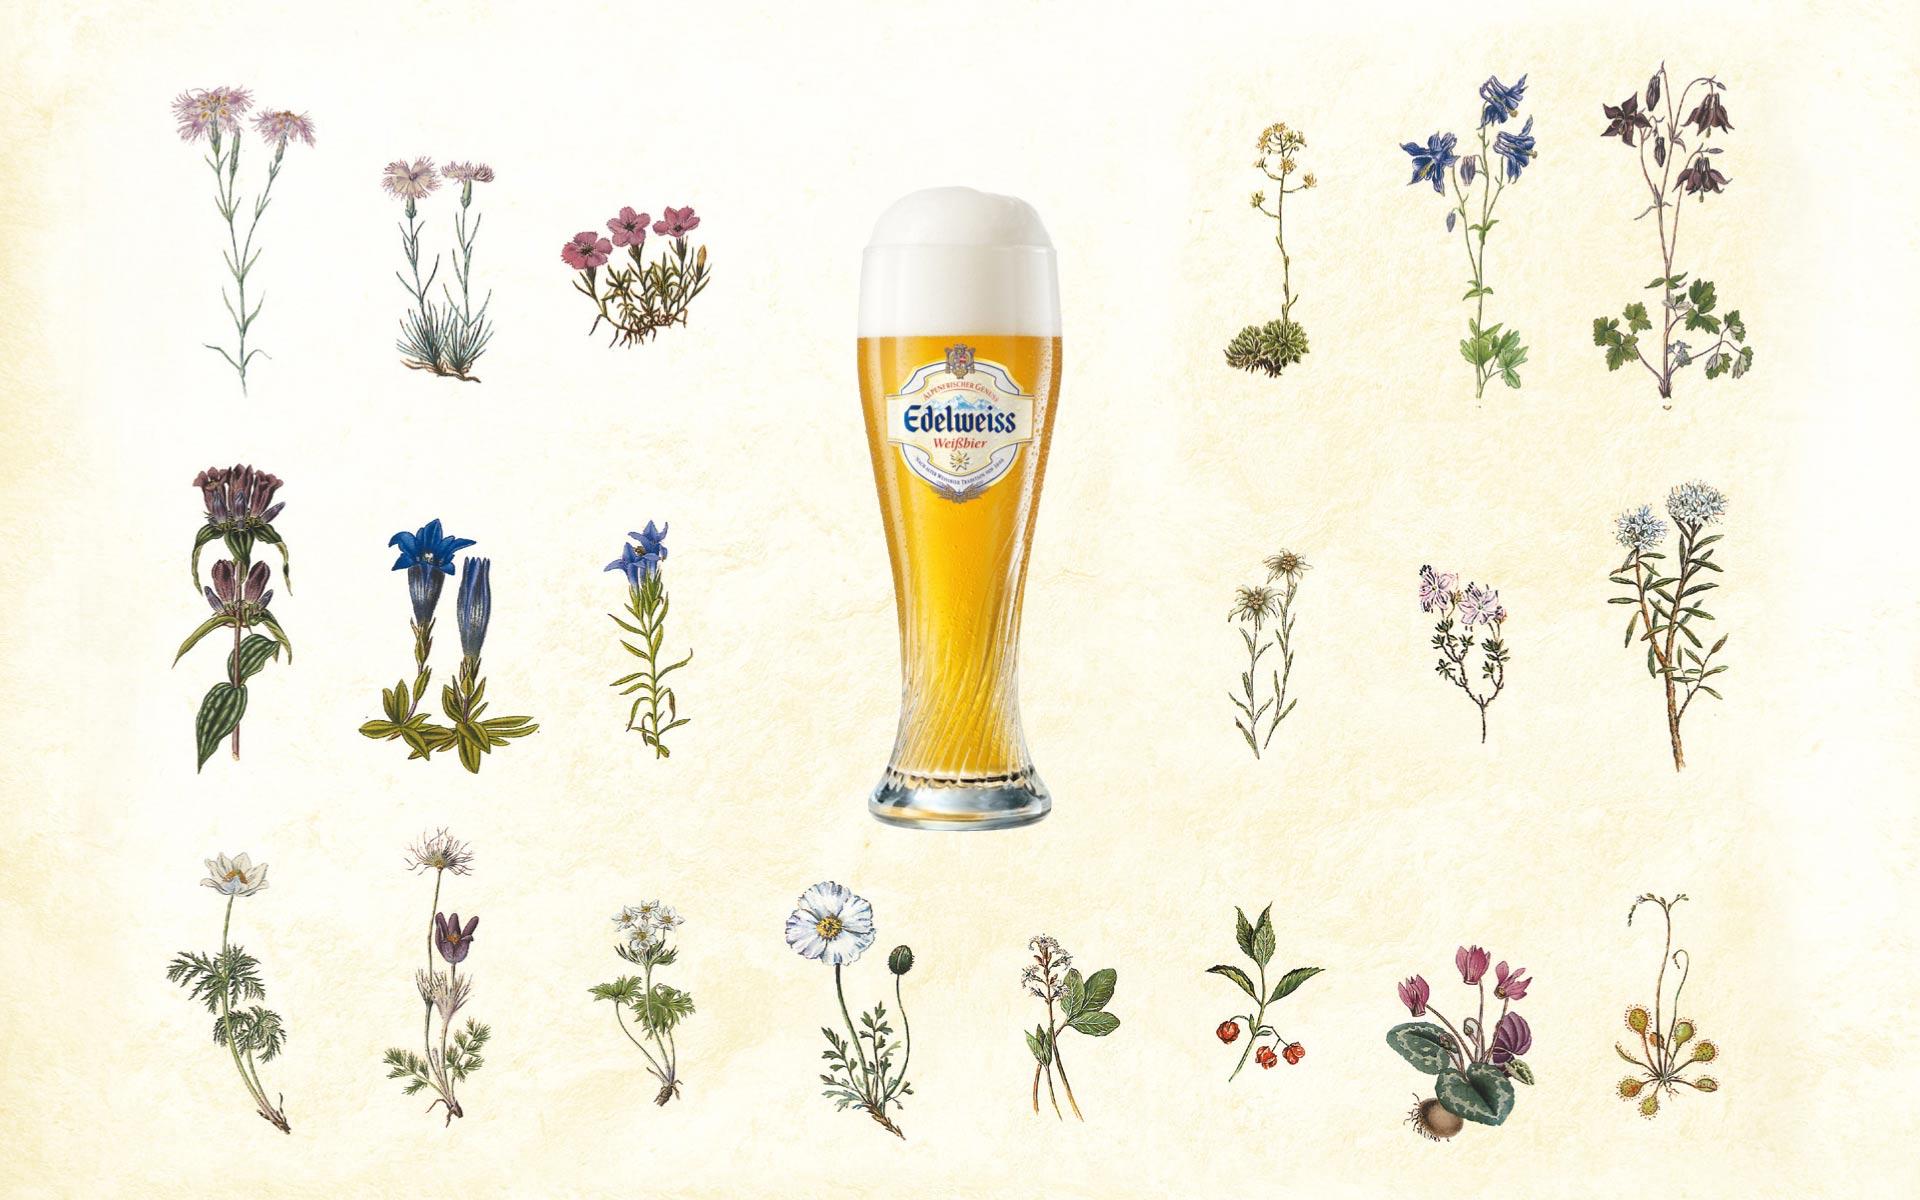 Download the Edelweiss Beer Wallpaper, Edelweiss Beer iPhone